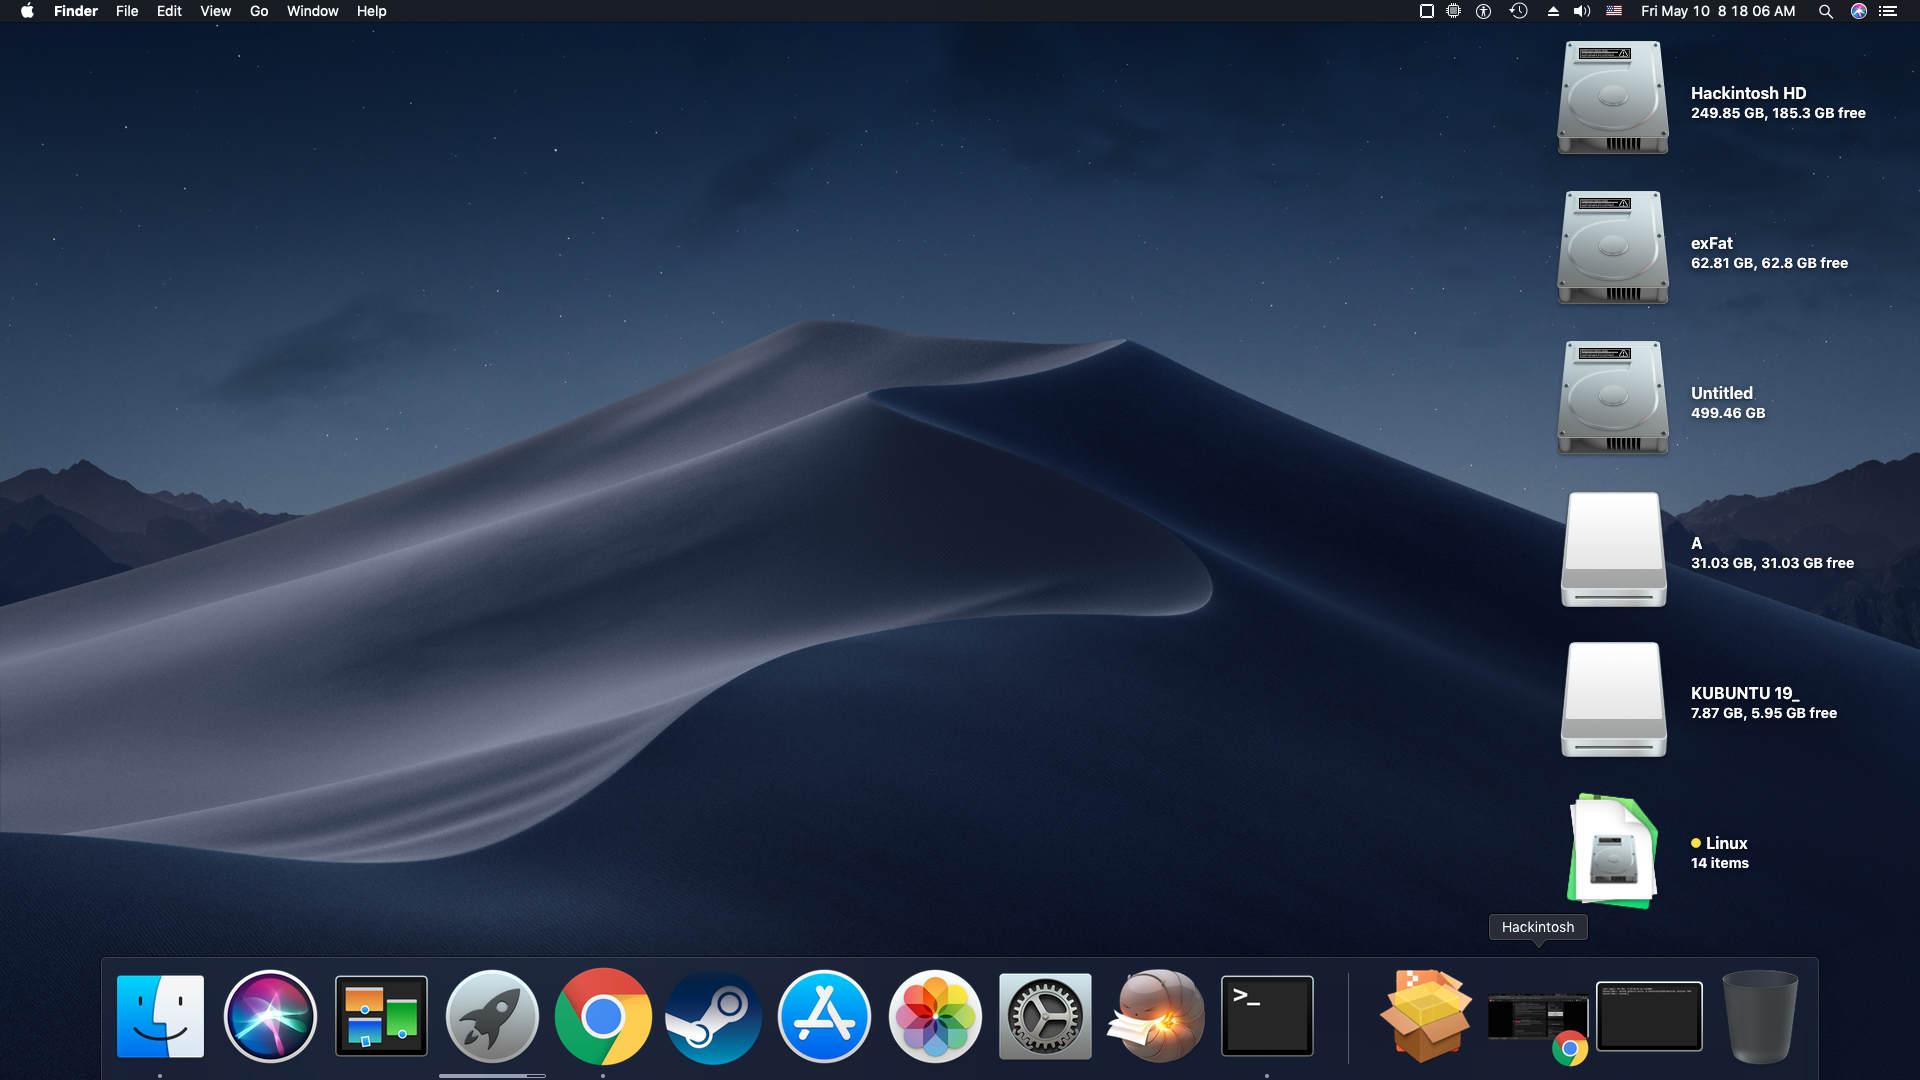 install windows 7 on mac powerbook g4